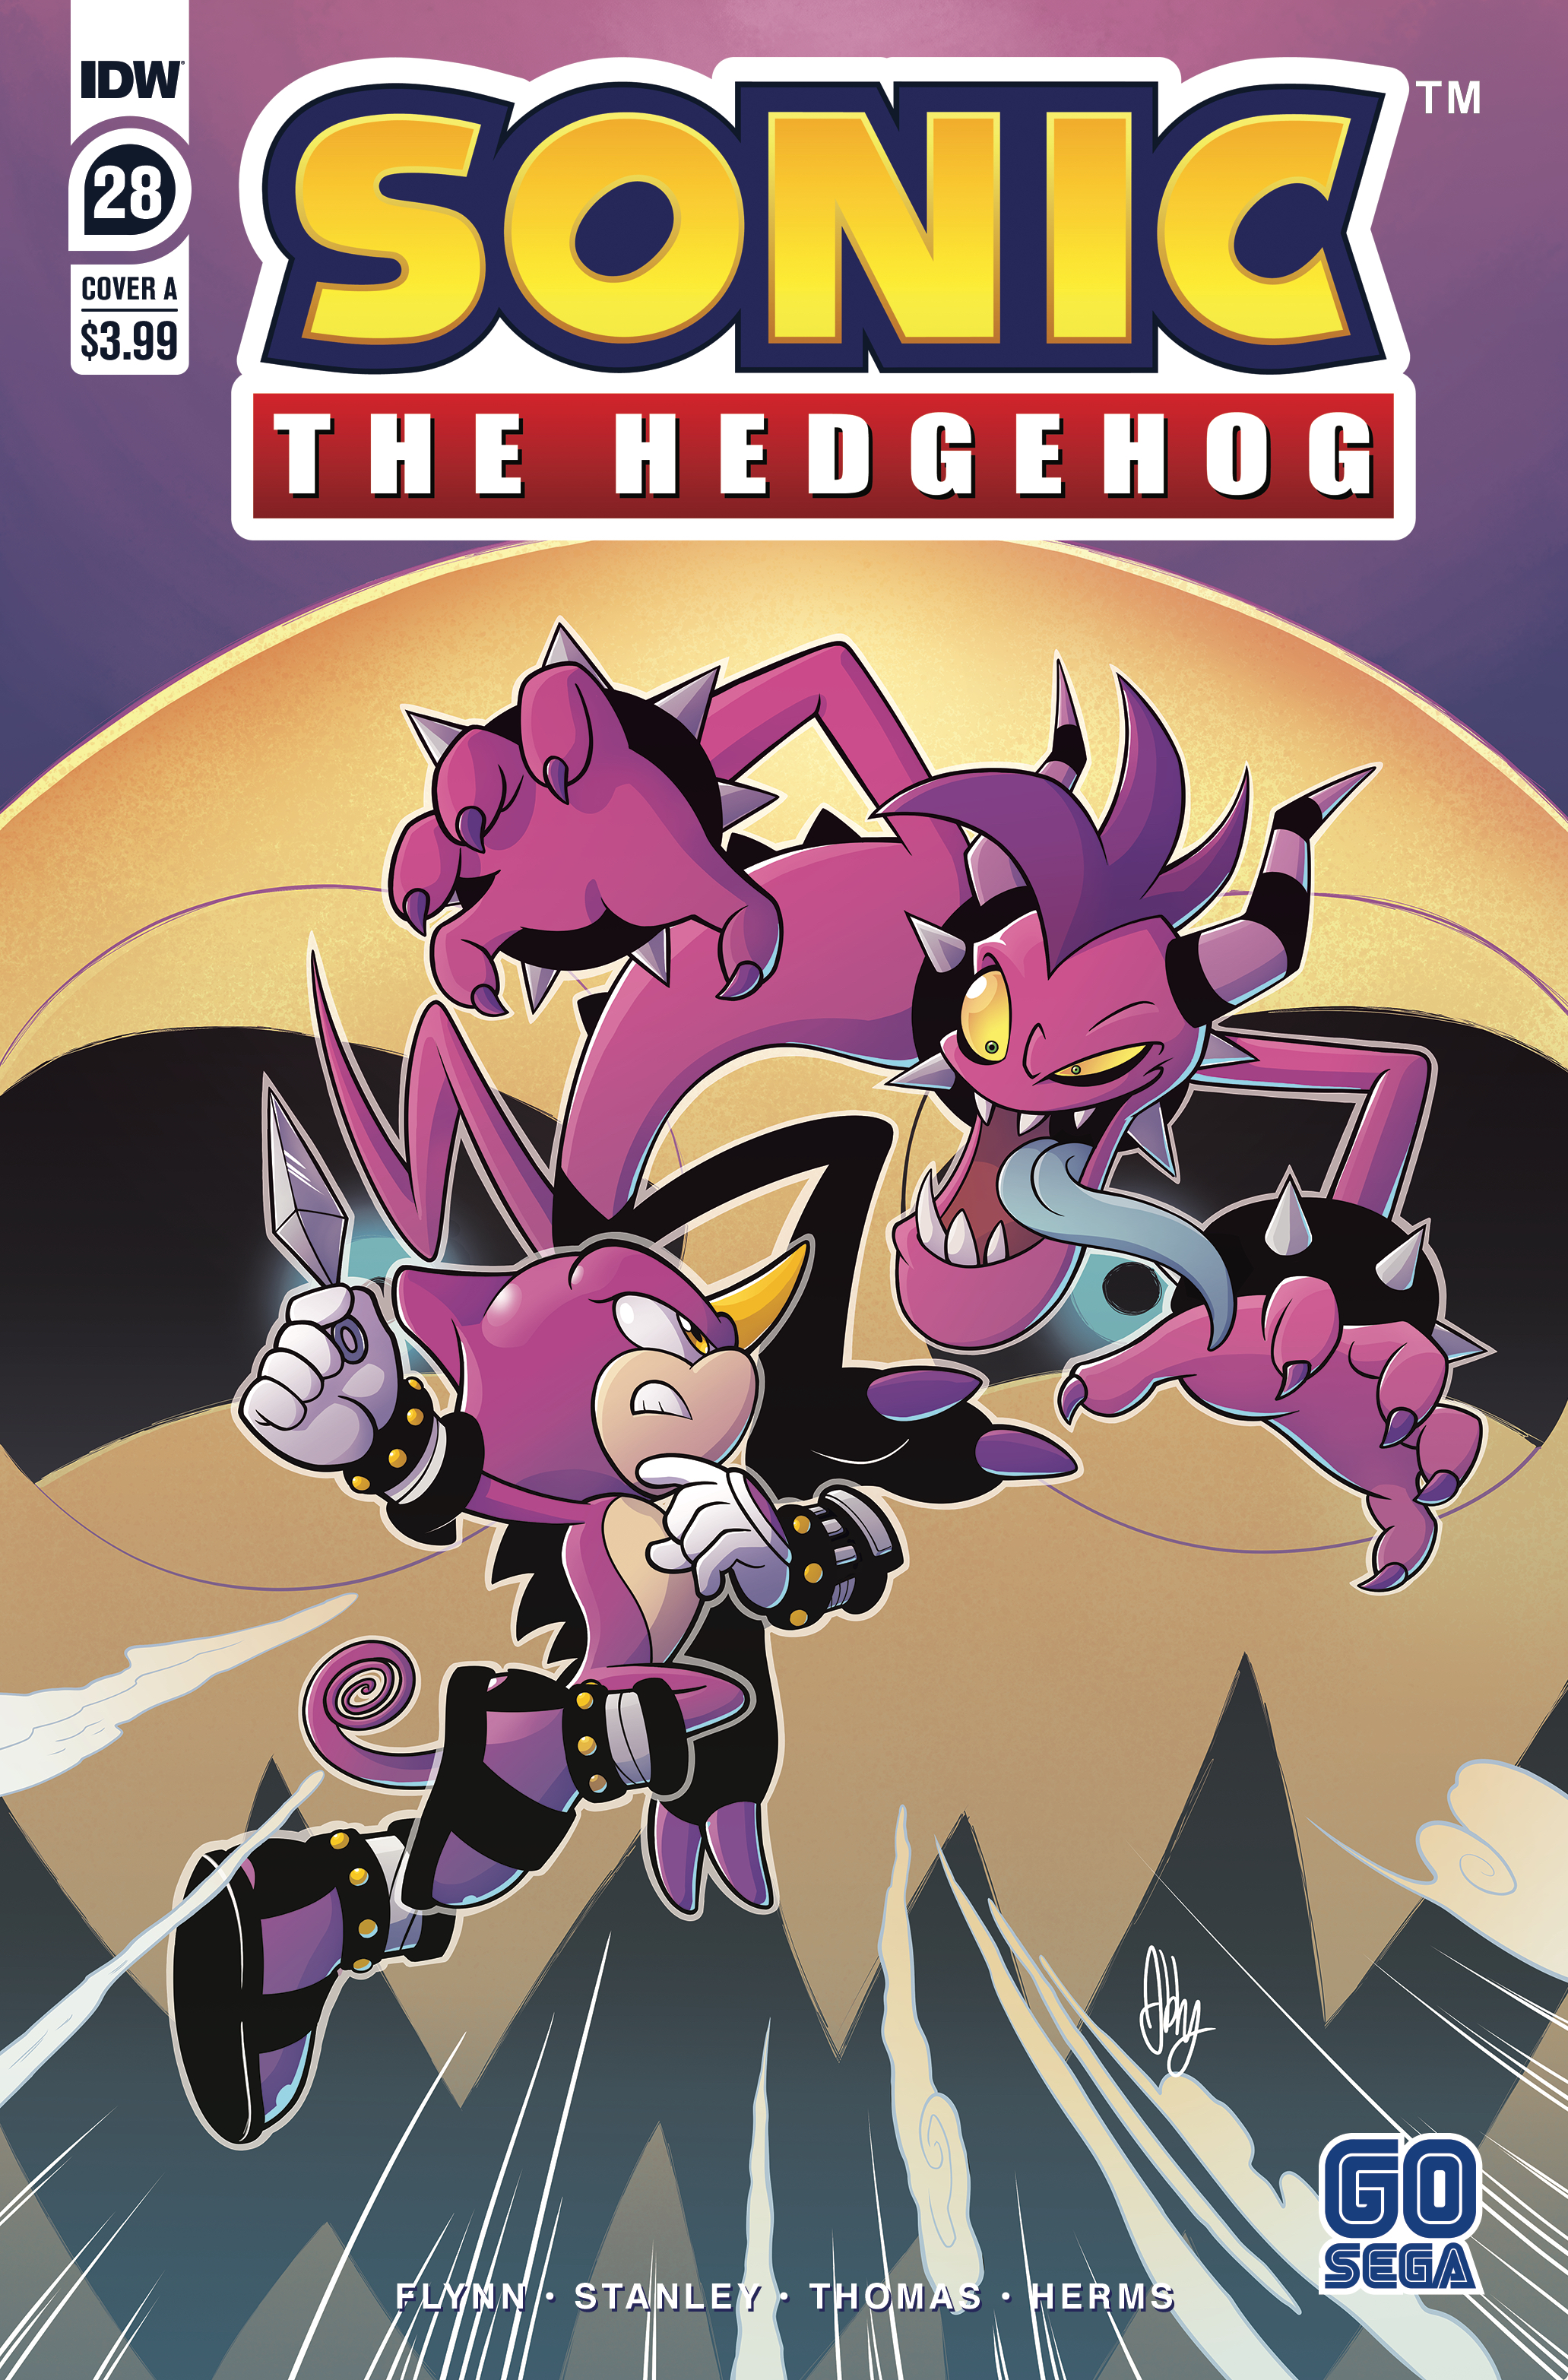 Sonic the Hedgehog #28 Cover A Bulmer